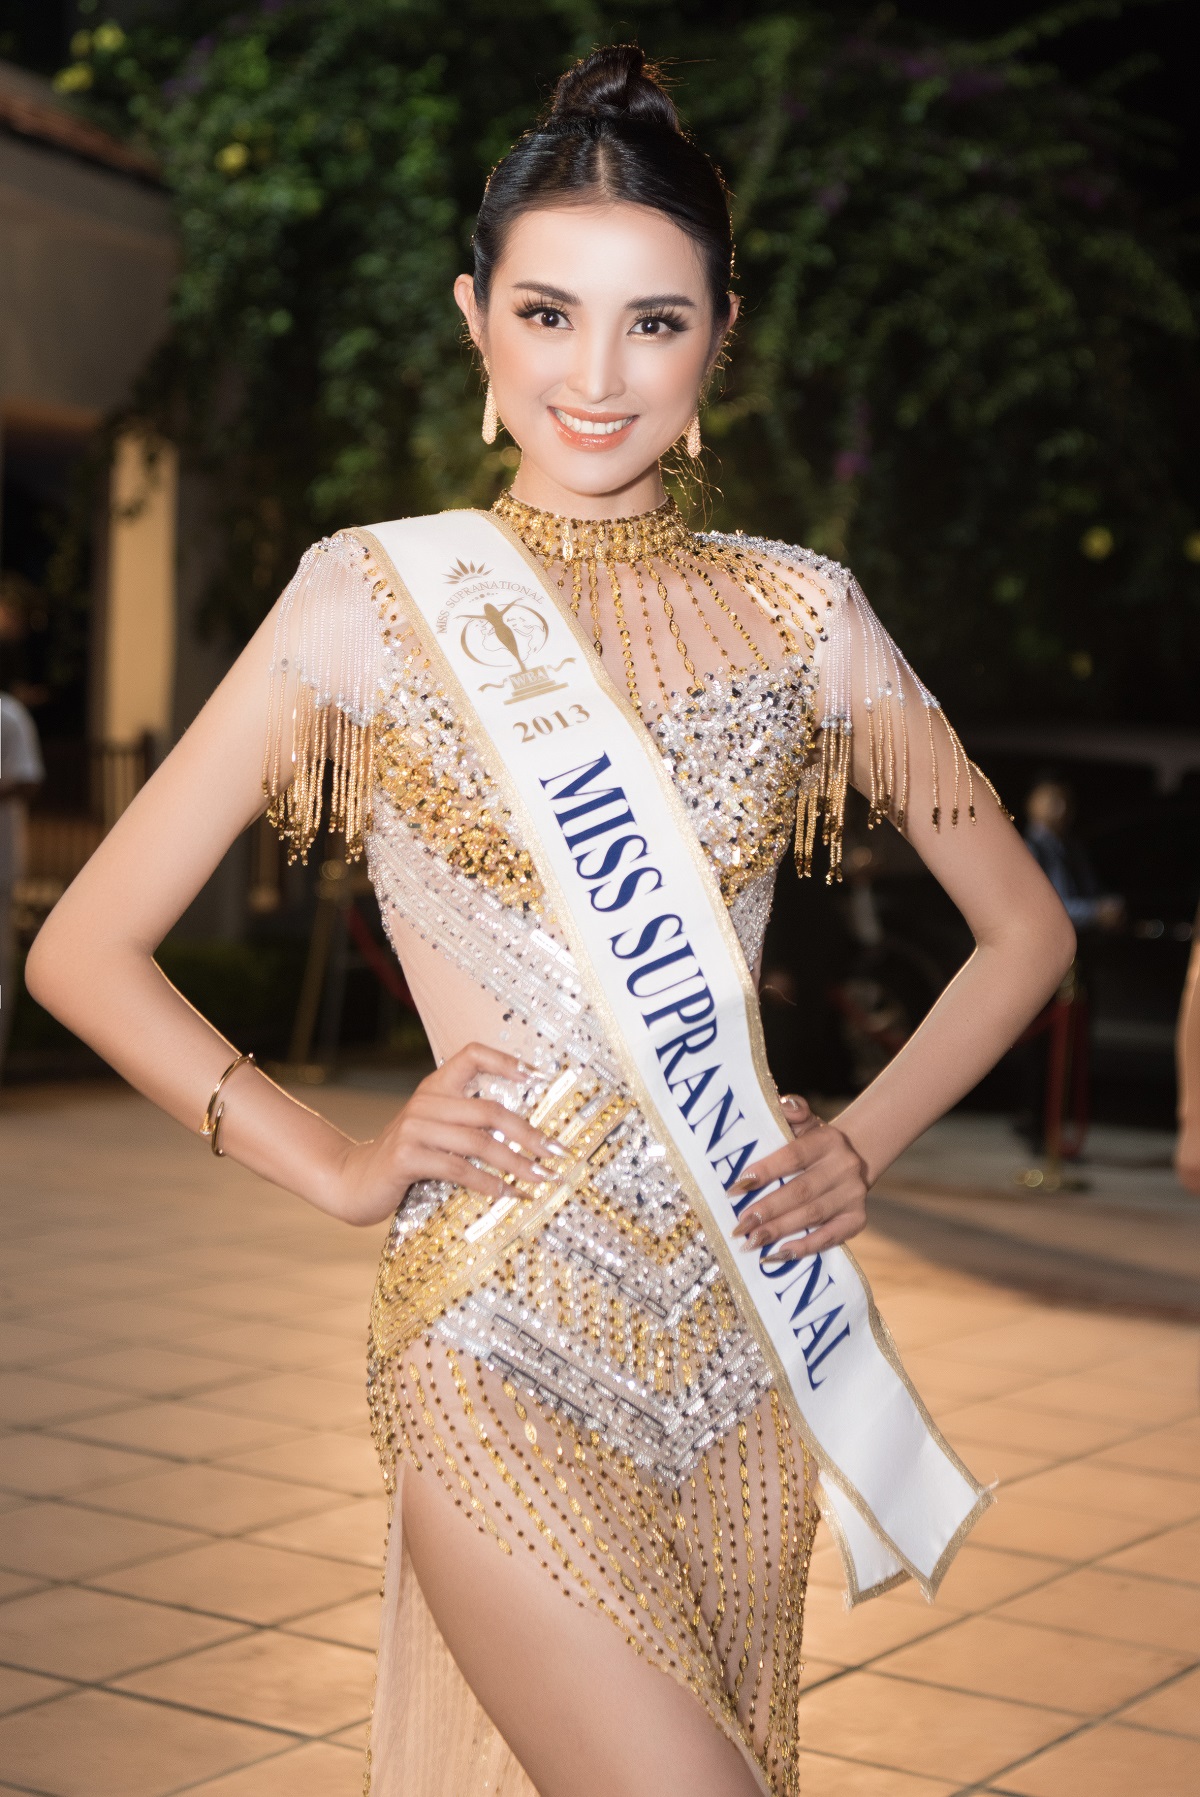 7- Hoa hậu Siêu quốc gia 2013